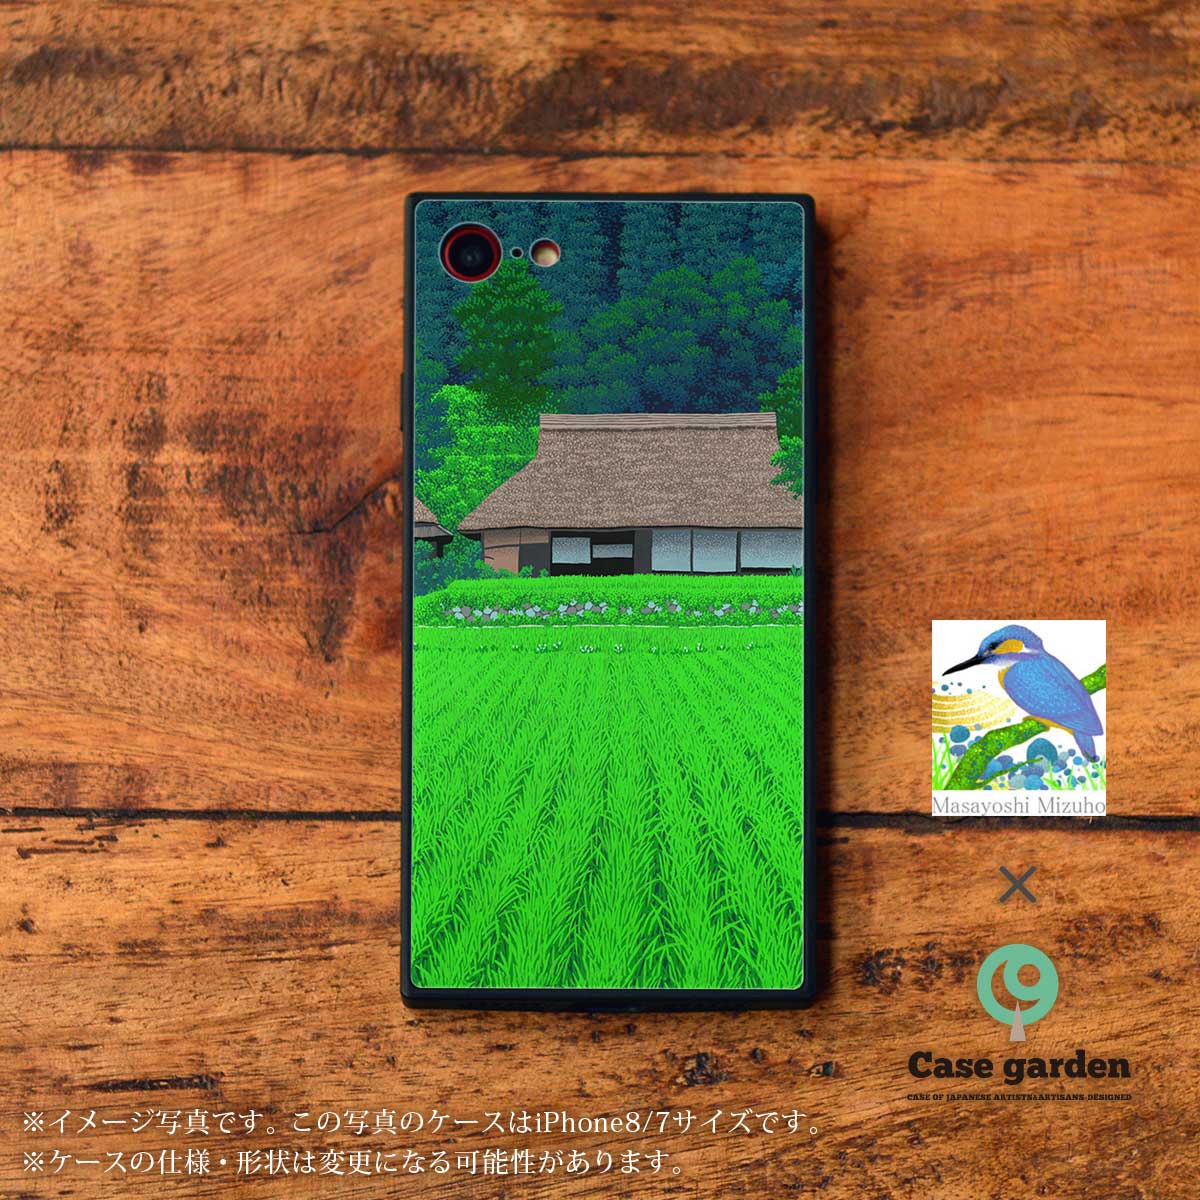 Masayoshi Mizuhoデザインの、キラキラと輝く背面カバーのガラスが美しいスクエア型強化ガラススマホケース「なつやすみ」です。写真の機種はiPhoneXRです。